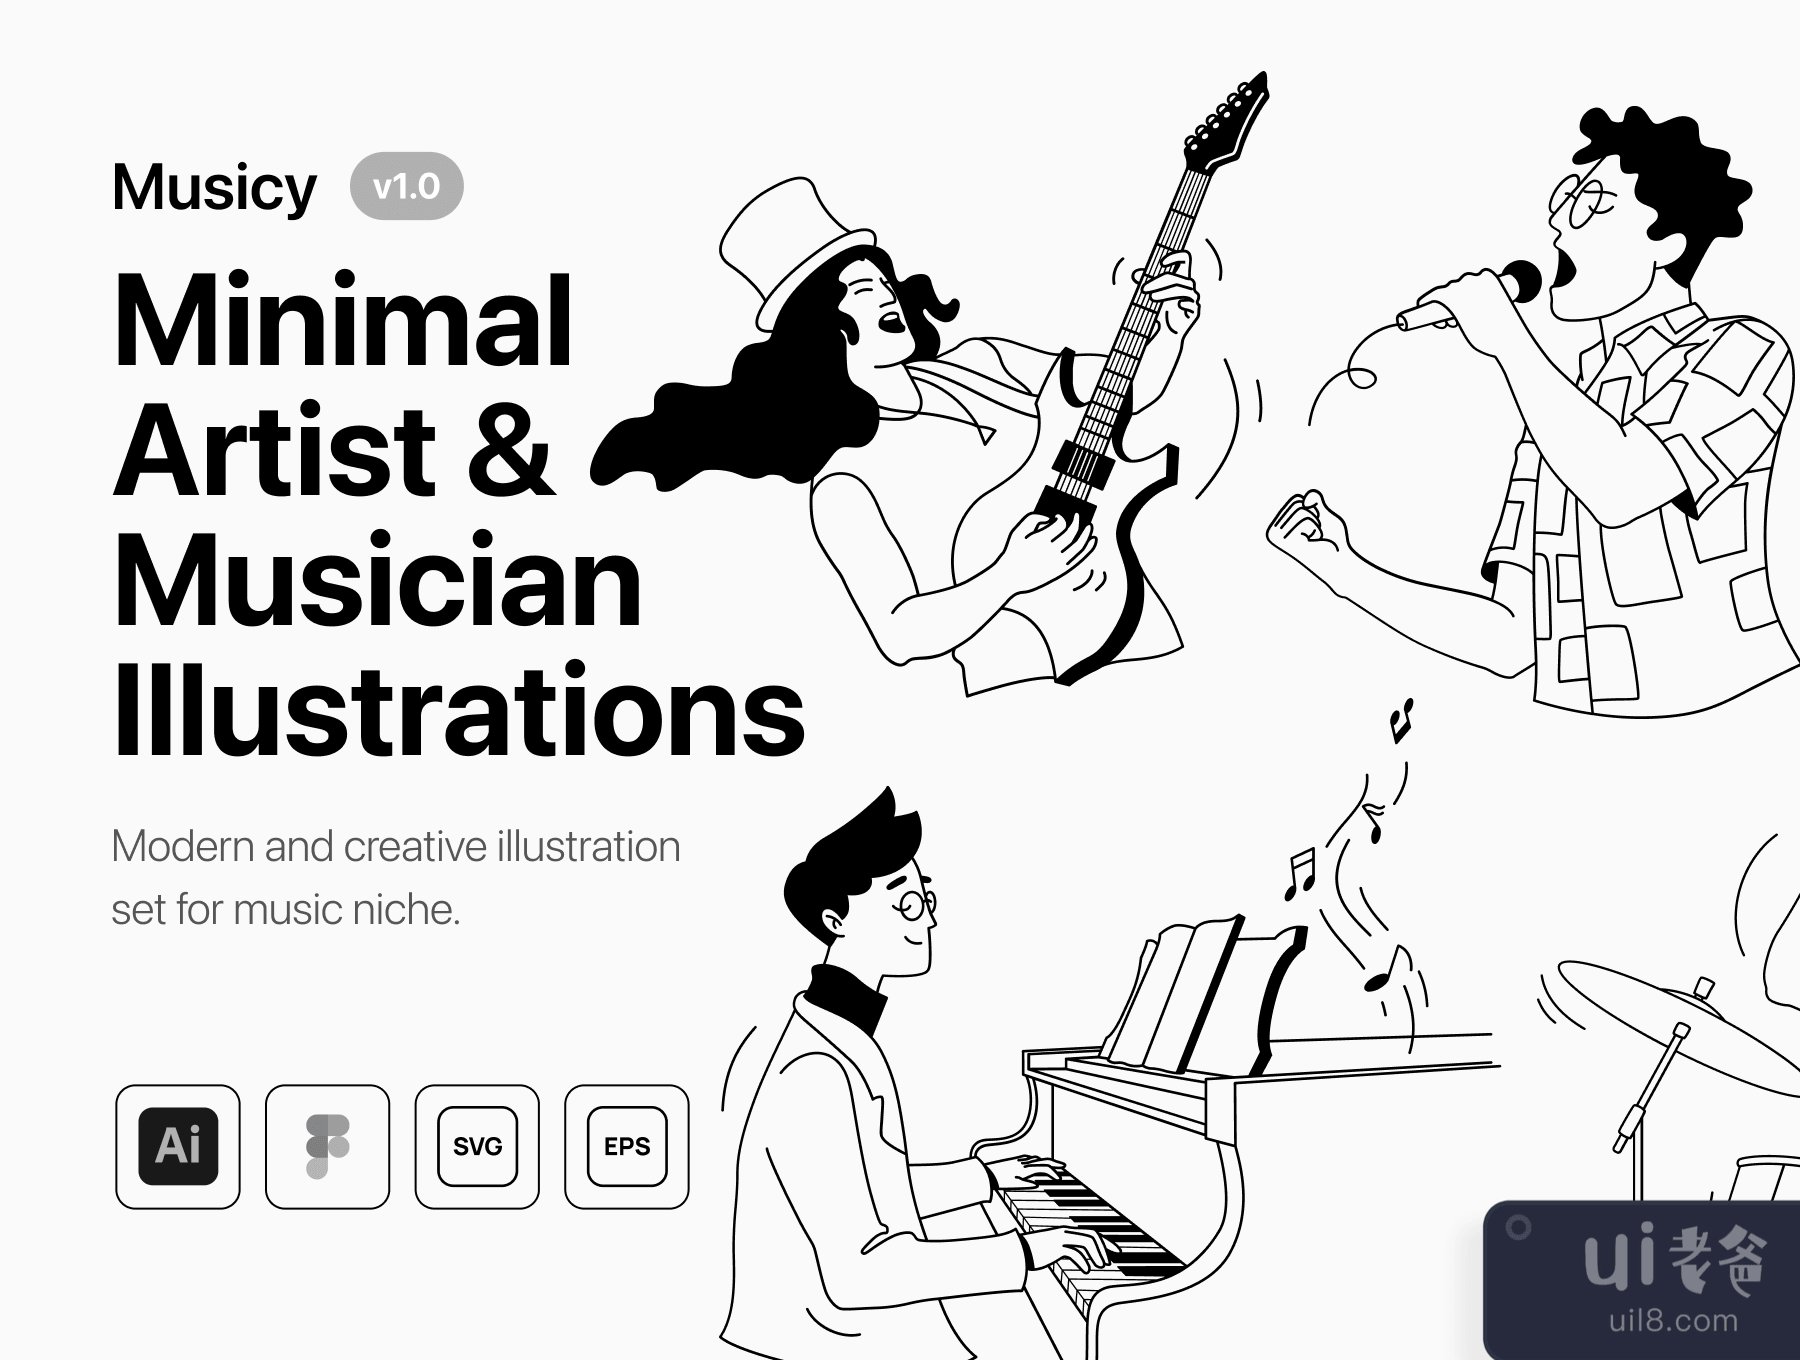 Musicy - 艺术家 - 音乐家插图 (Musicy - Artist - Musician Illustrations)插图